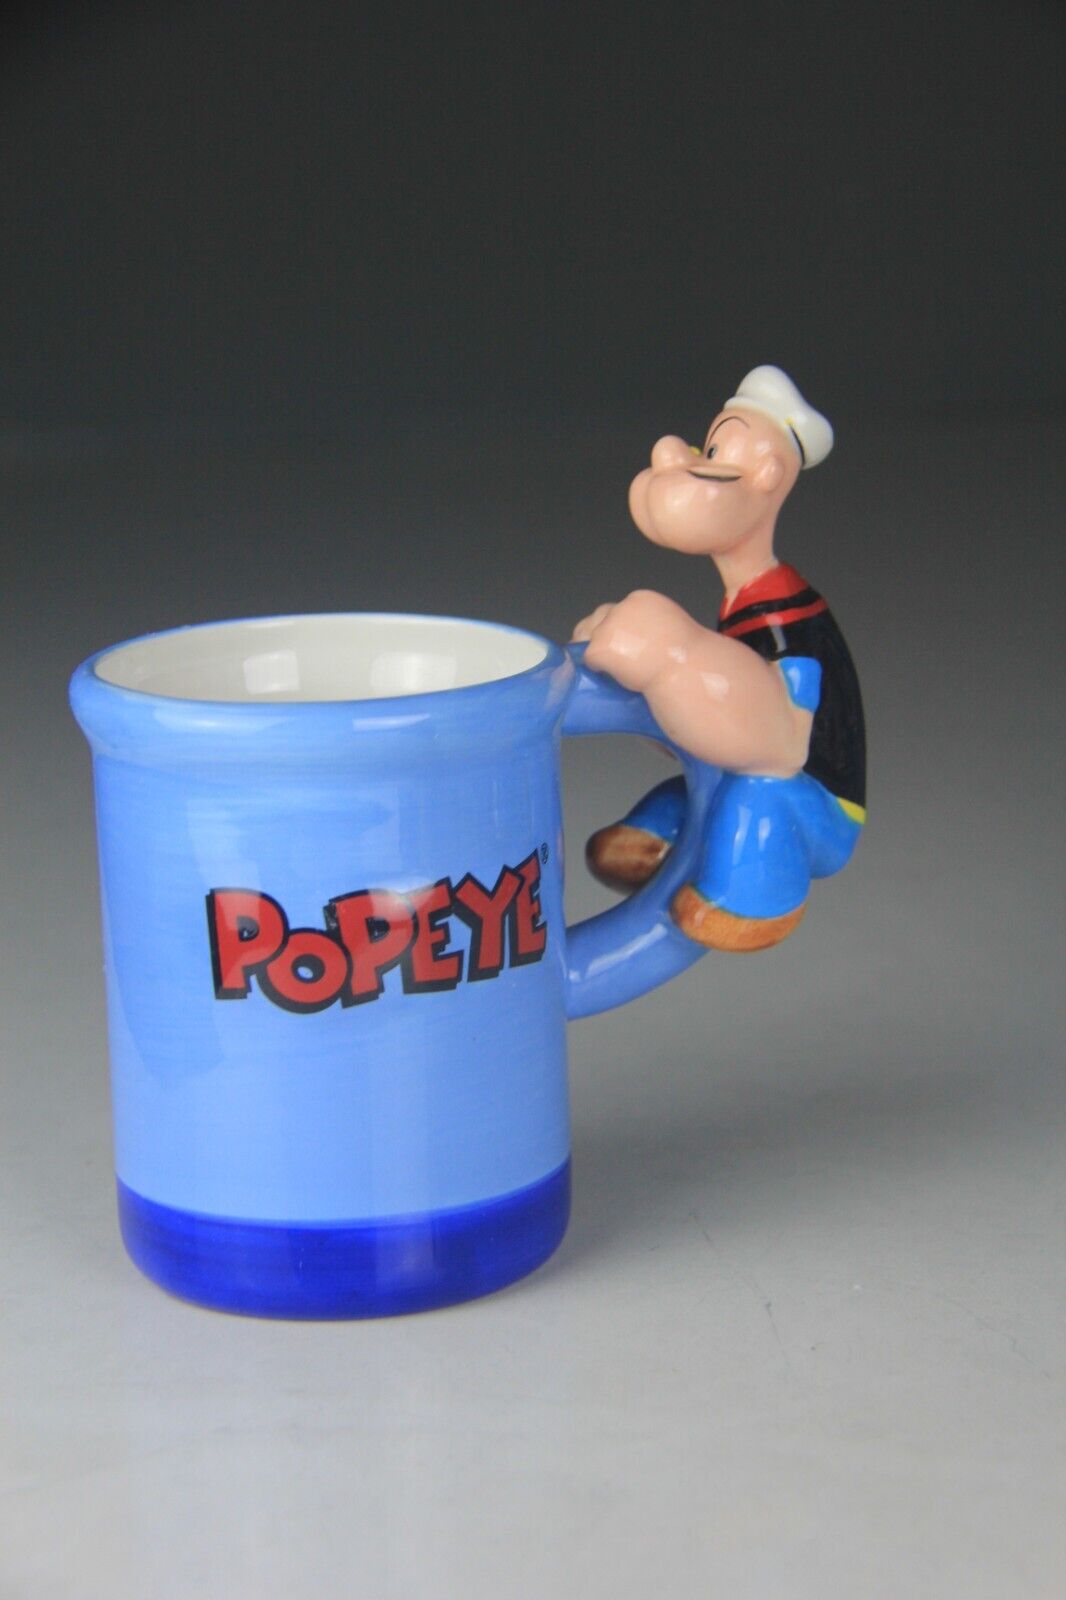 2002 Vandor Popeye the Sailor sculpted mug w/ original packaging